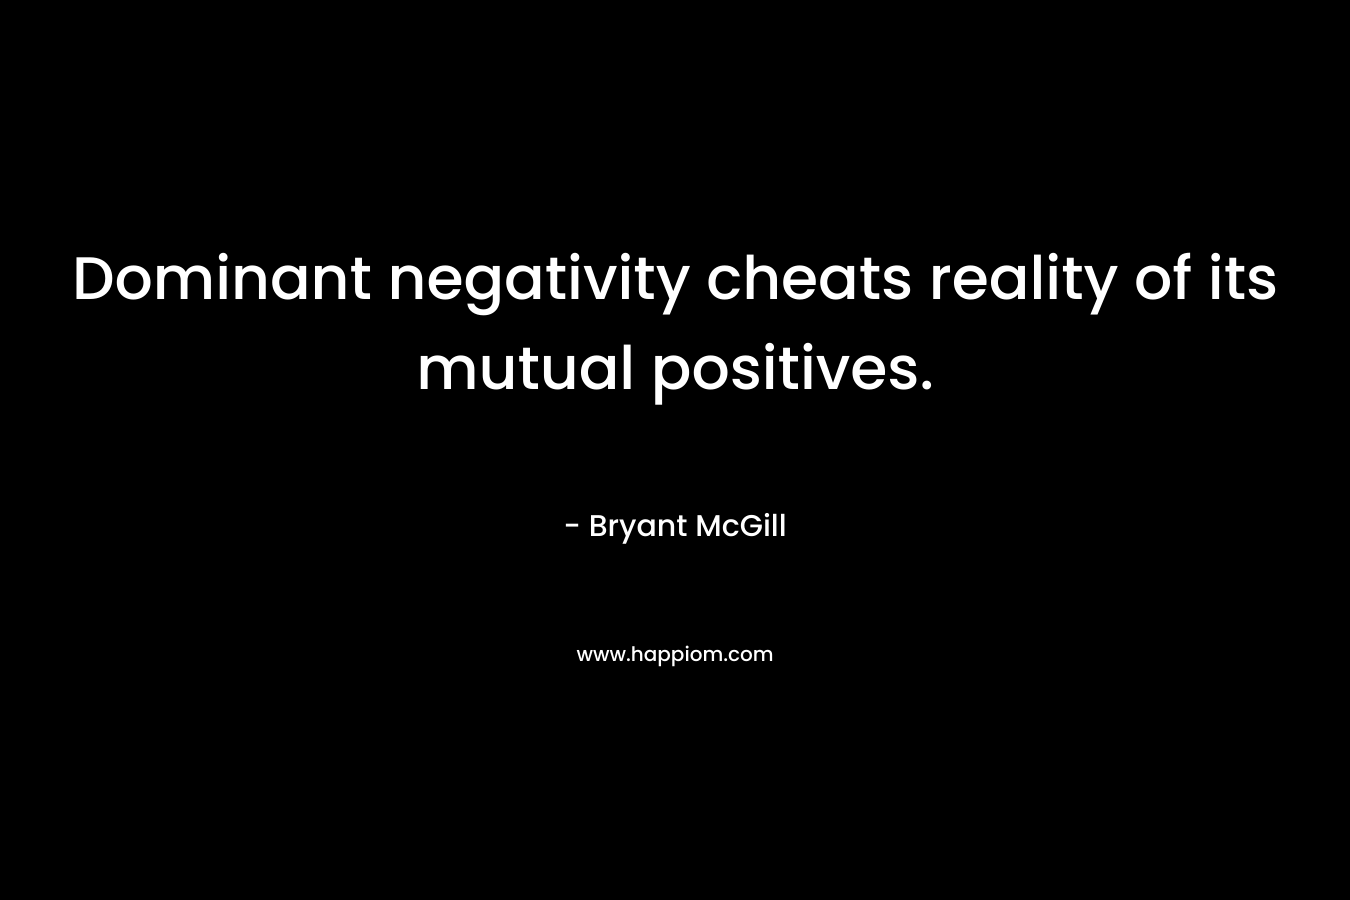 Dominant negativity cheats reality of its mutual positives.